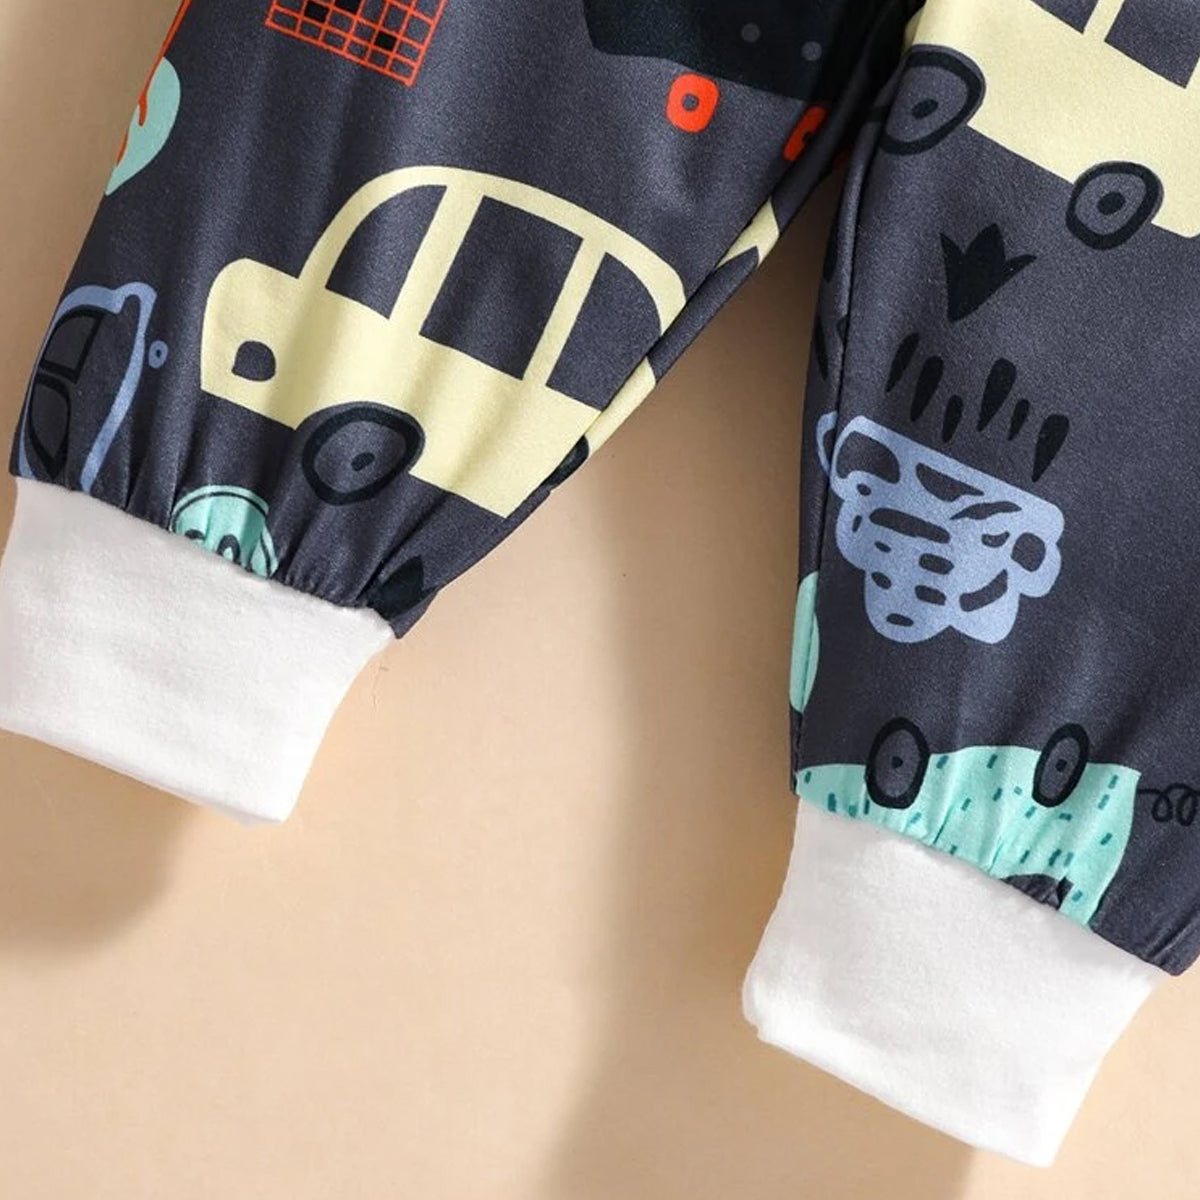 Venutaloza Stylish Baby Set Car-Tree Pullover& Letter Graphic & Alphabet Boys Letter (Combo Pack Of 3) T-Shirt & Pants.